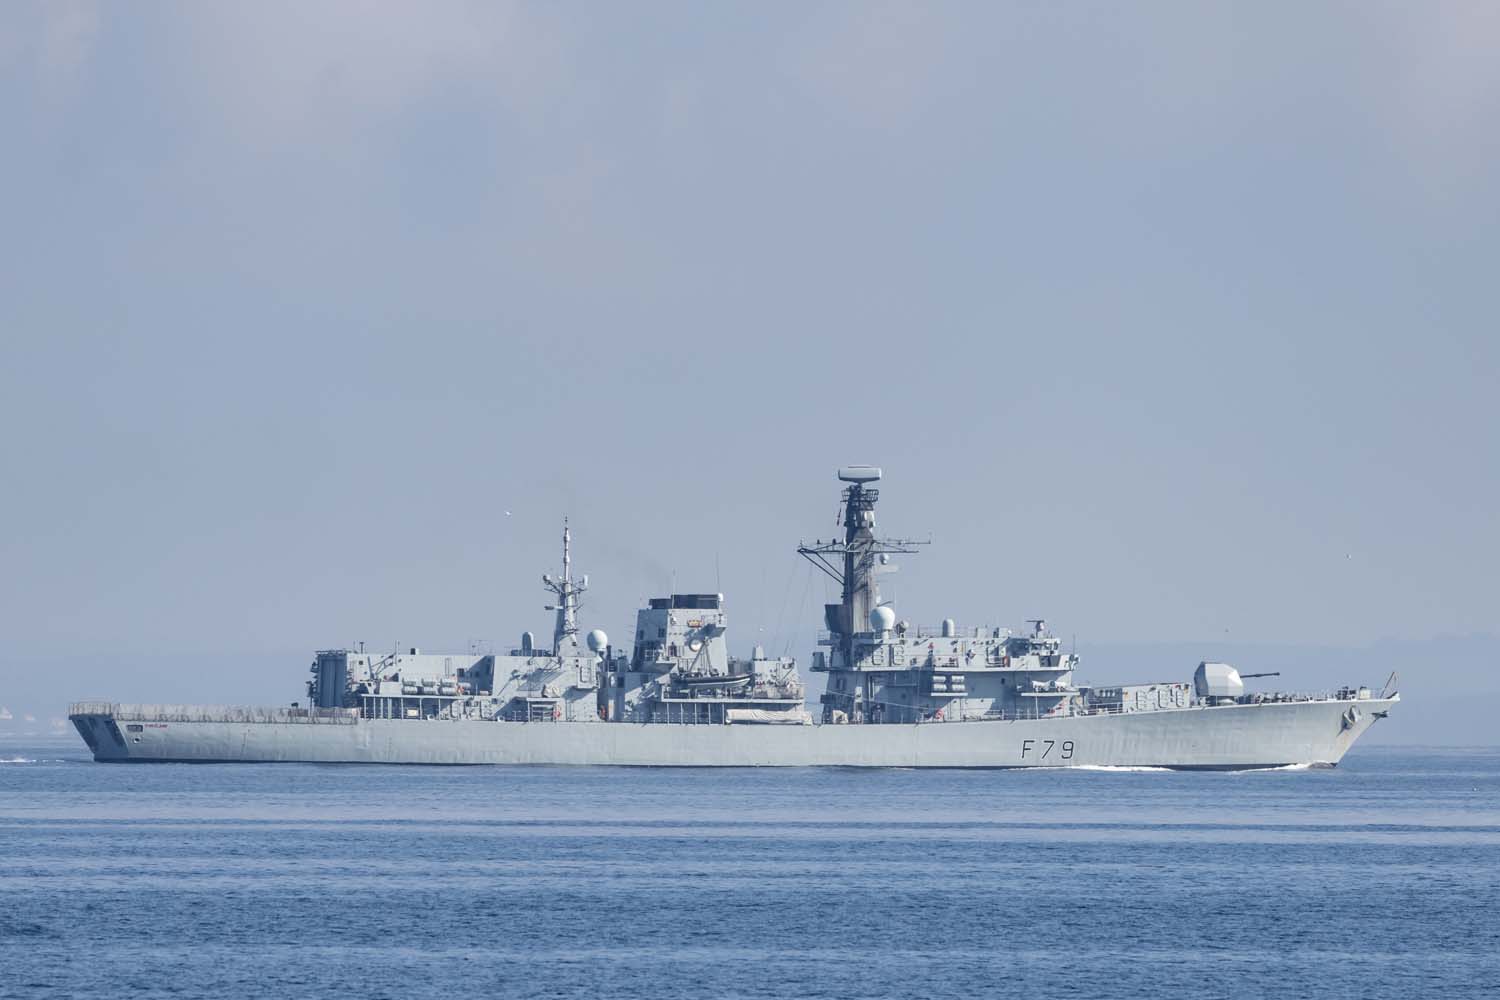 Royal Navy tracks movements of Russian submarines into the North Sea